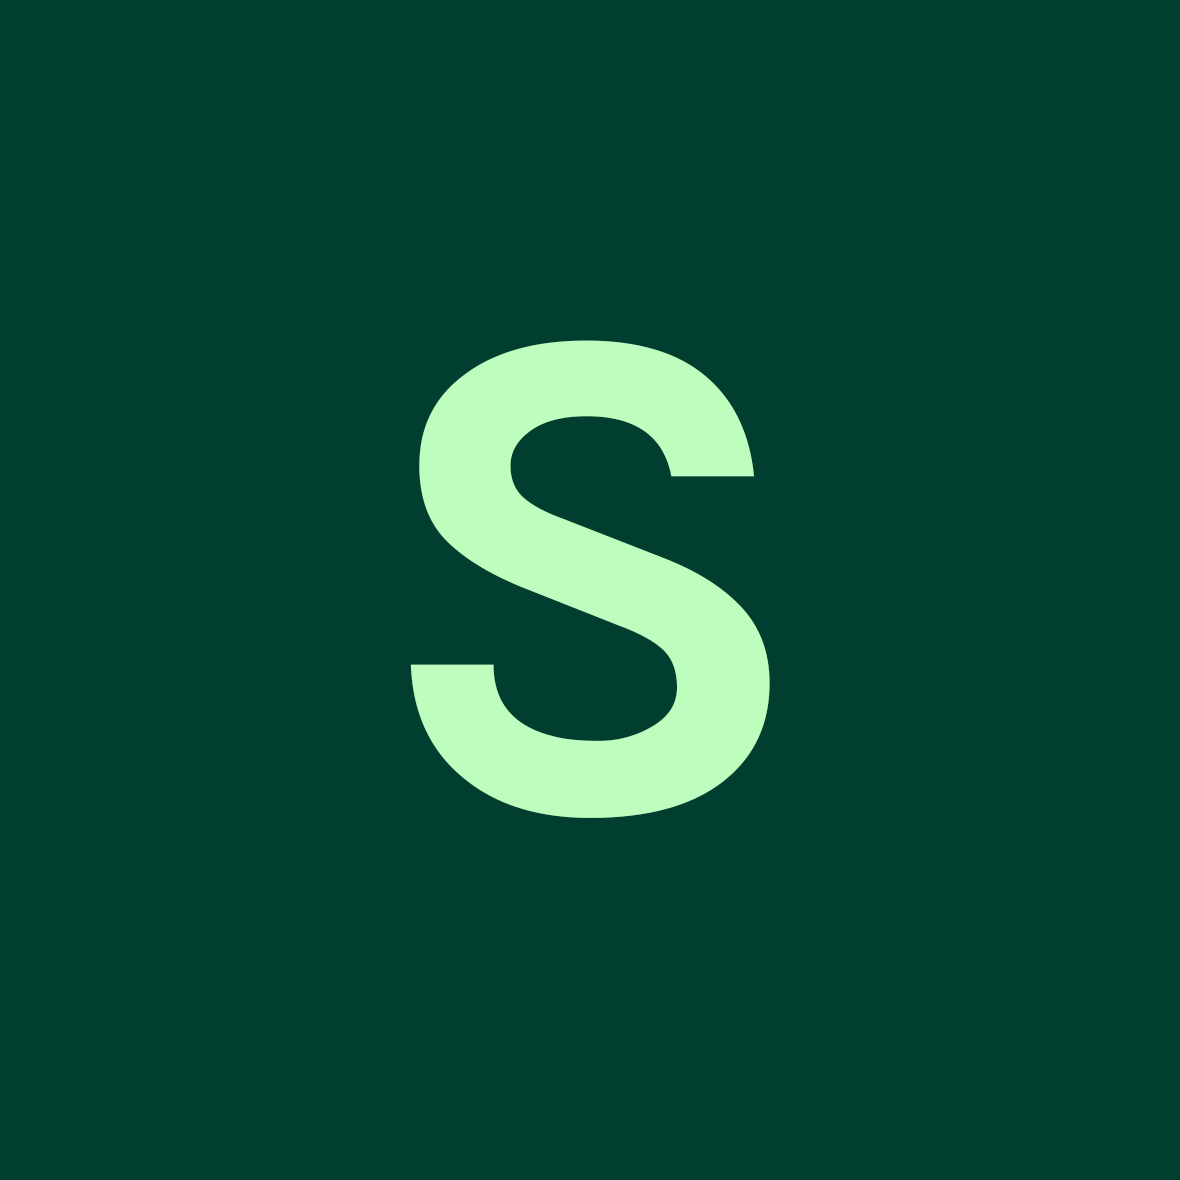 Settle Logo